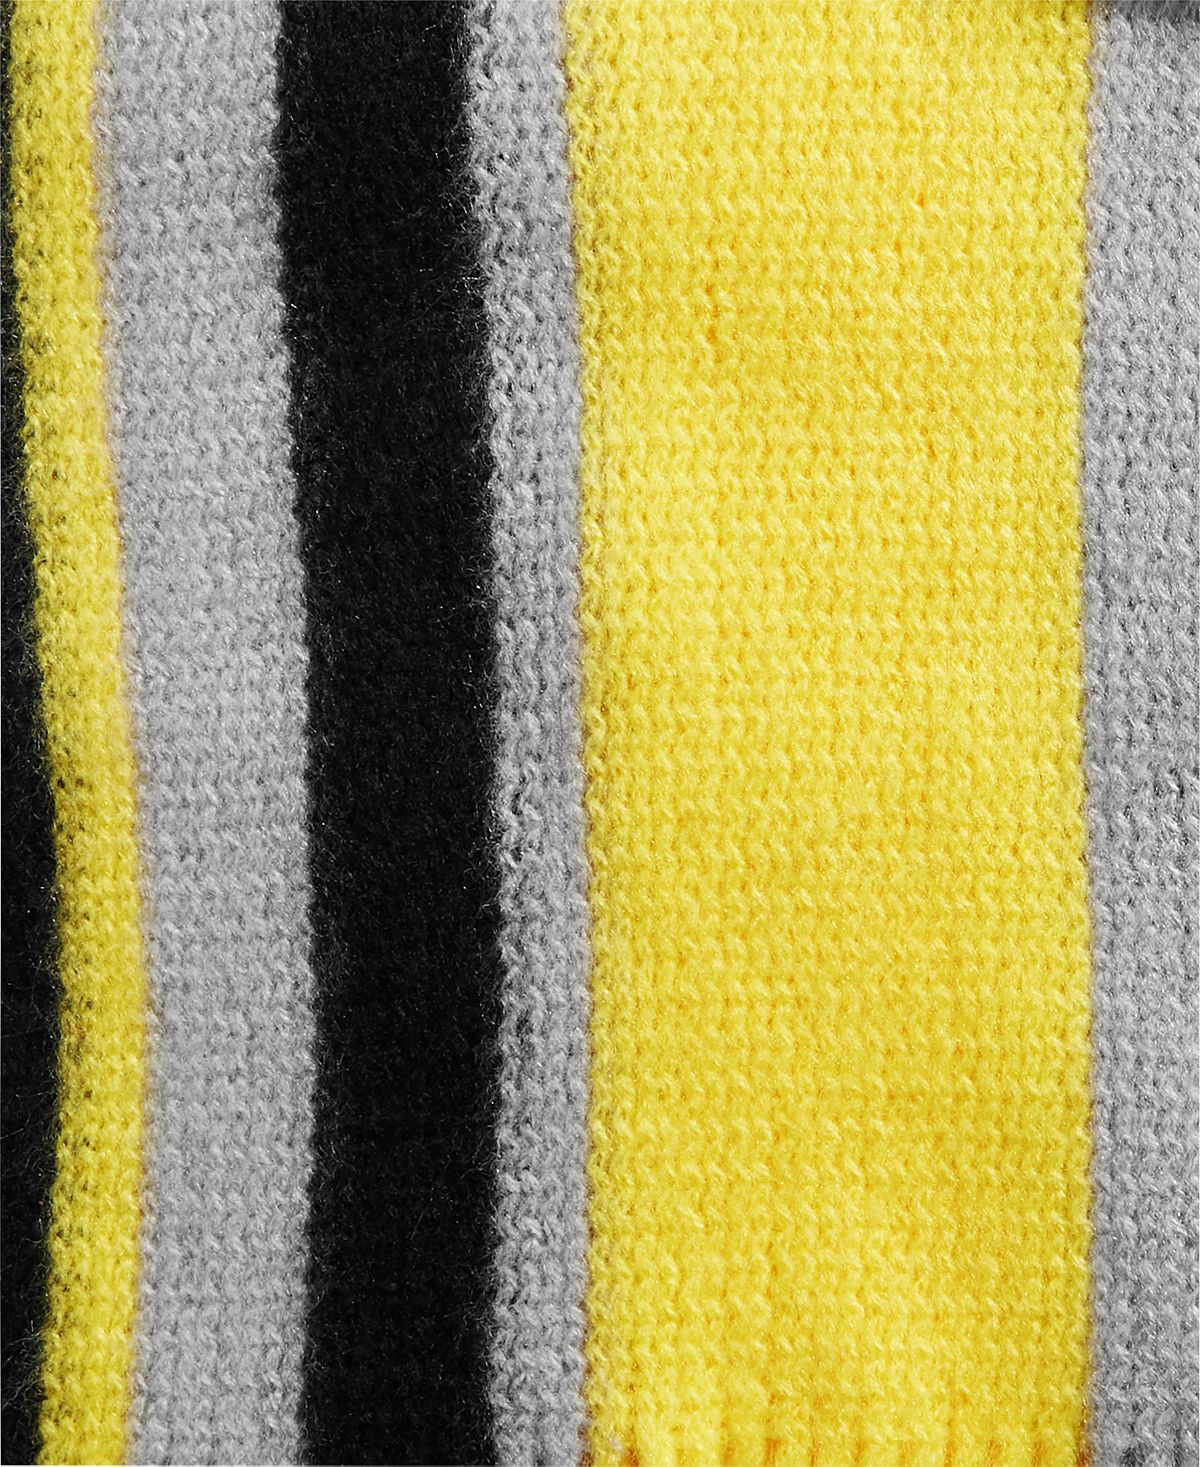 Alfani Striped Scarf Yellow/Grey